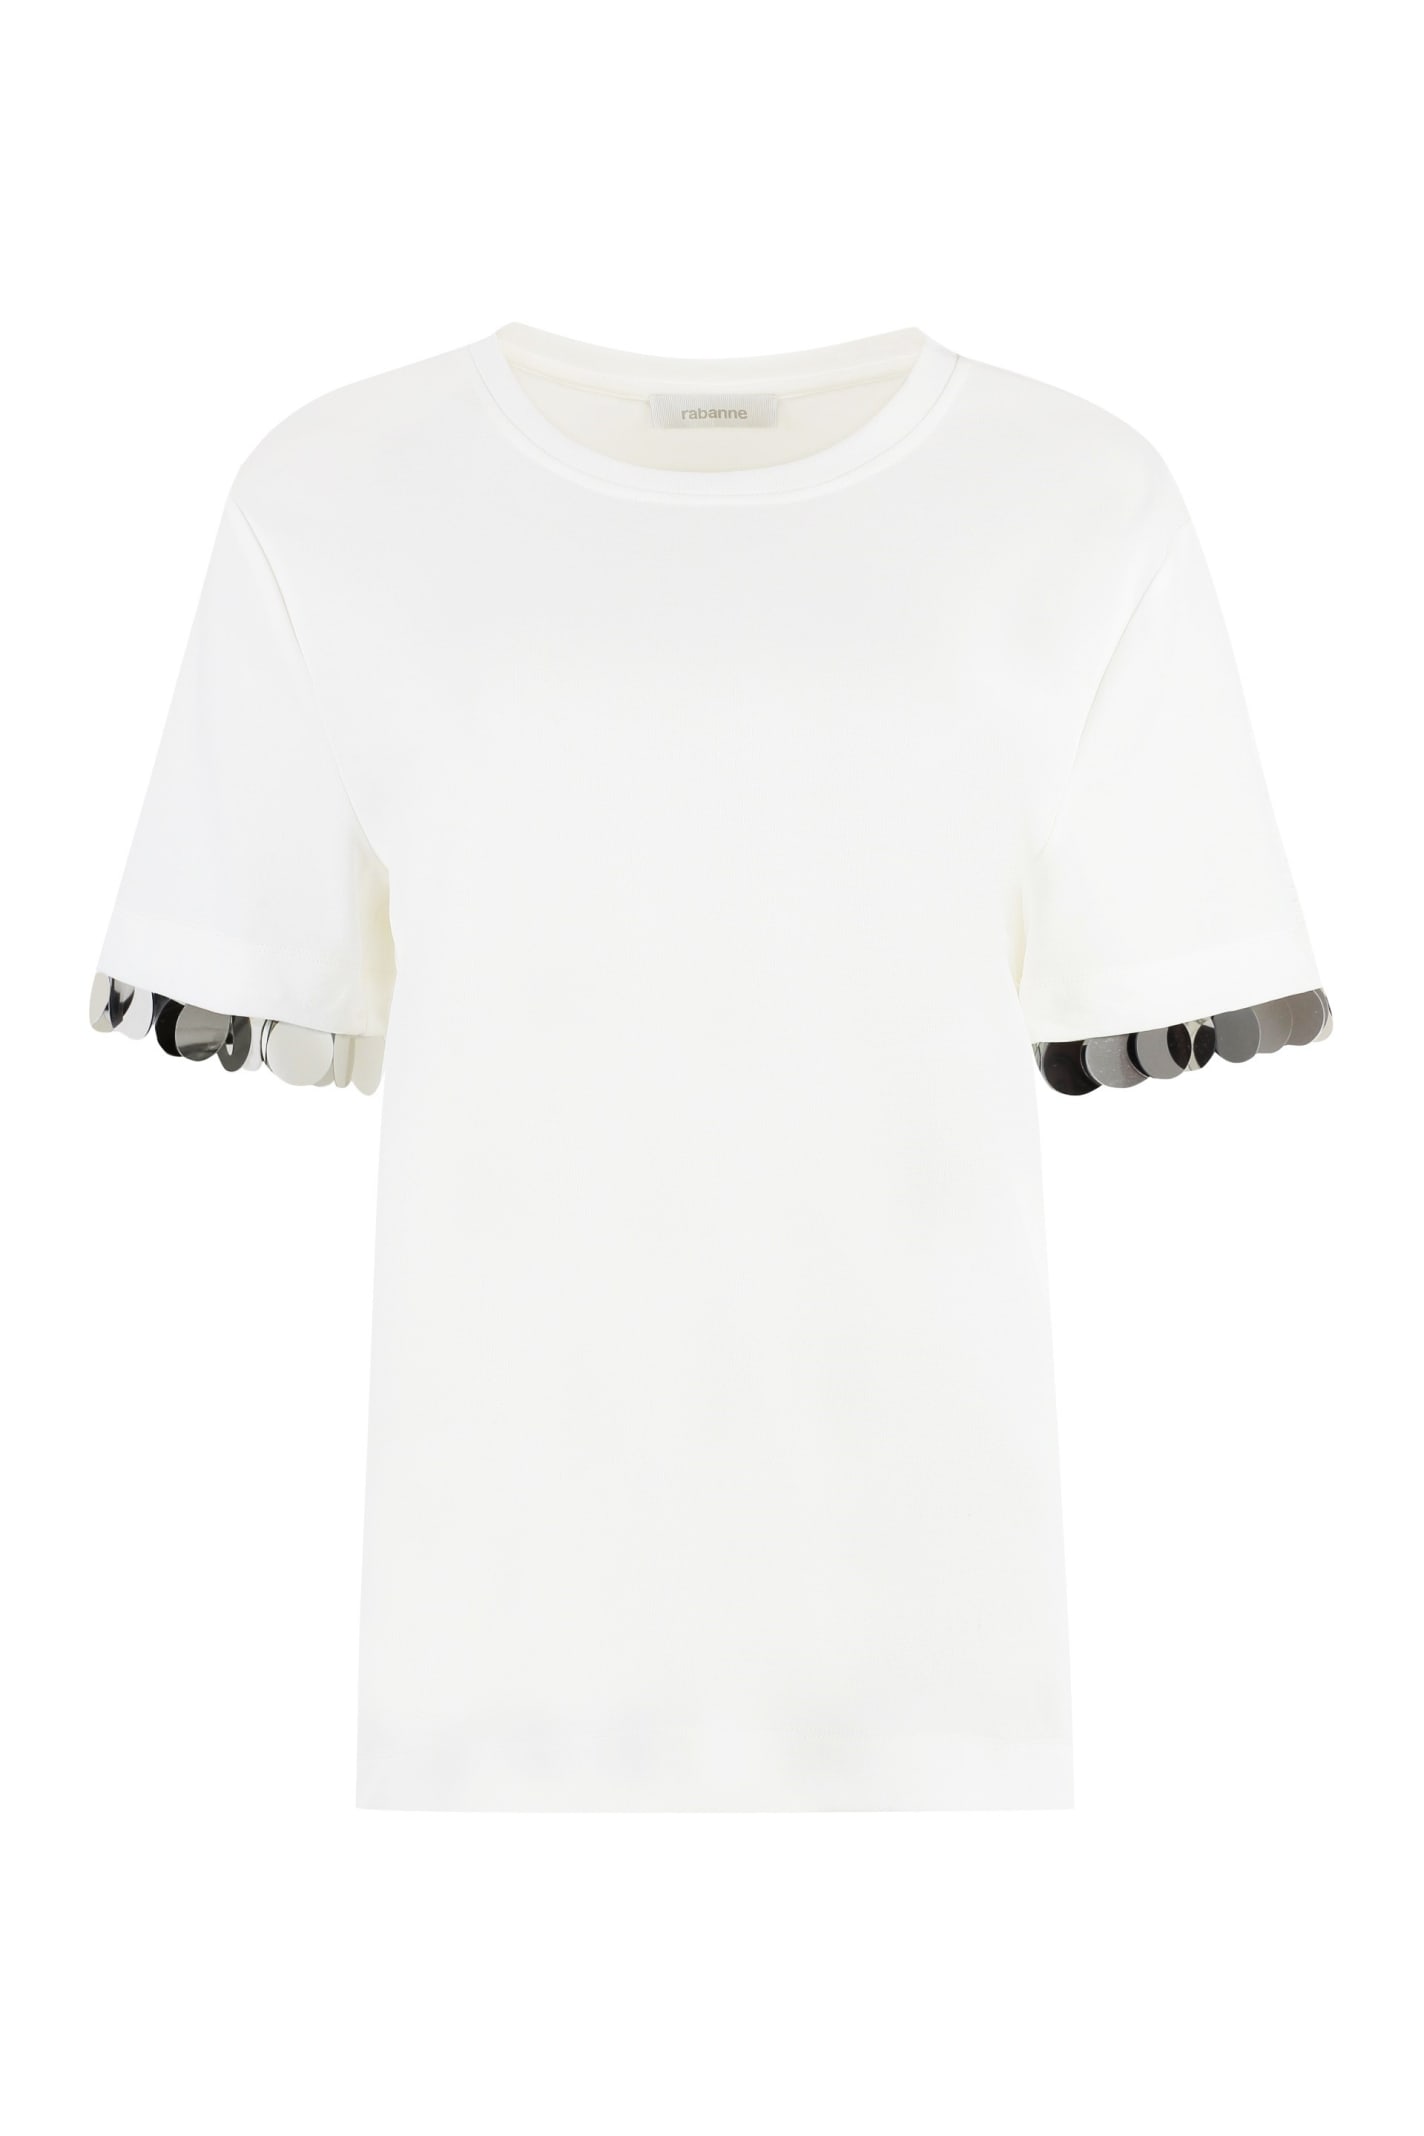 Paco Rabanne Viscose Crew-neck T-shirt In White